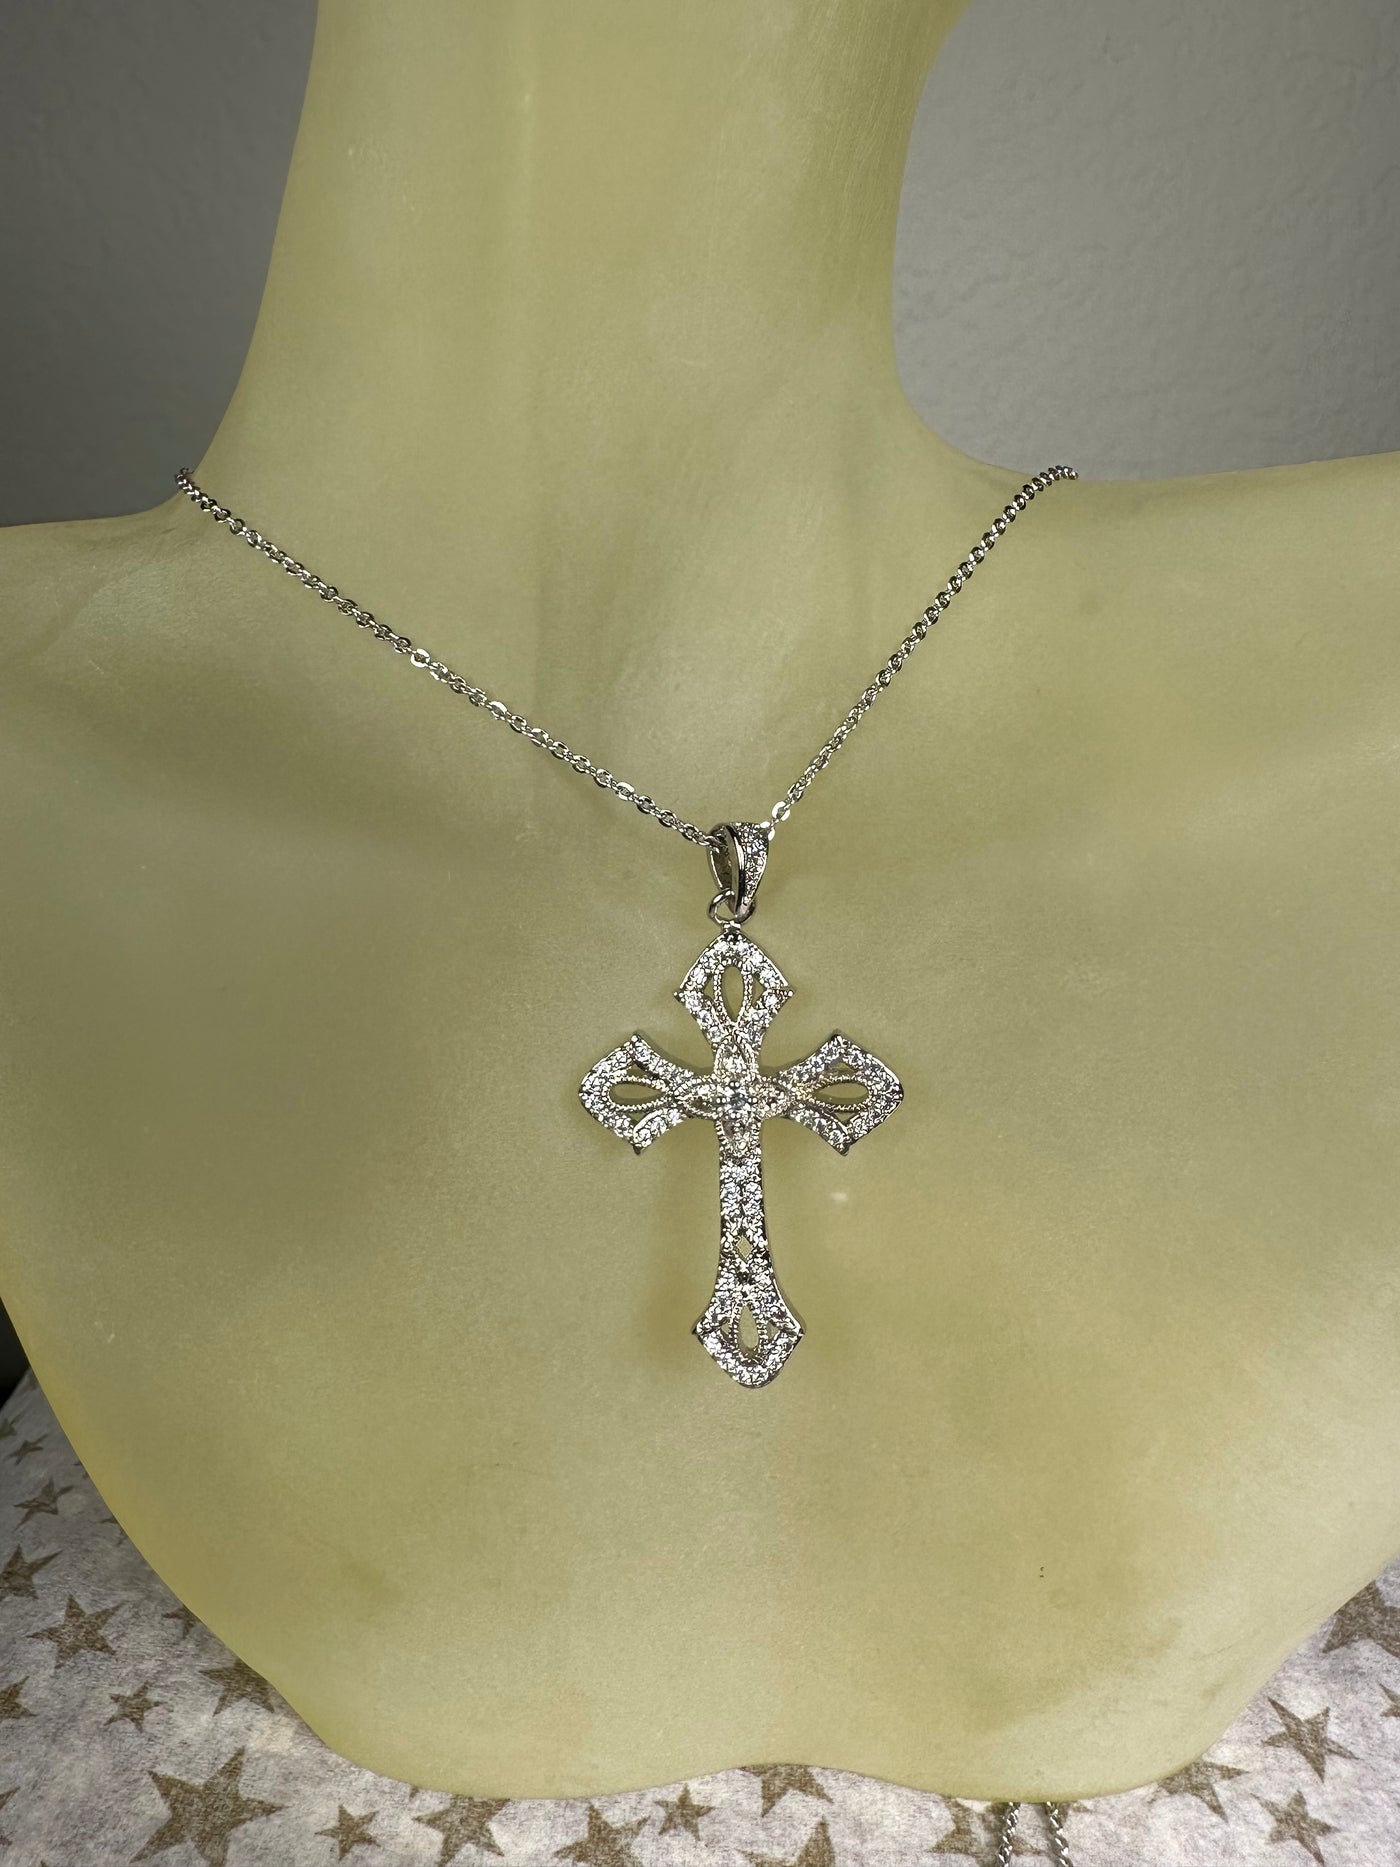 Pave Set Cubic Zirconia Ornate CZ Cross Pendant Necklace in Silver Tone